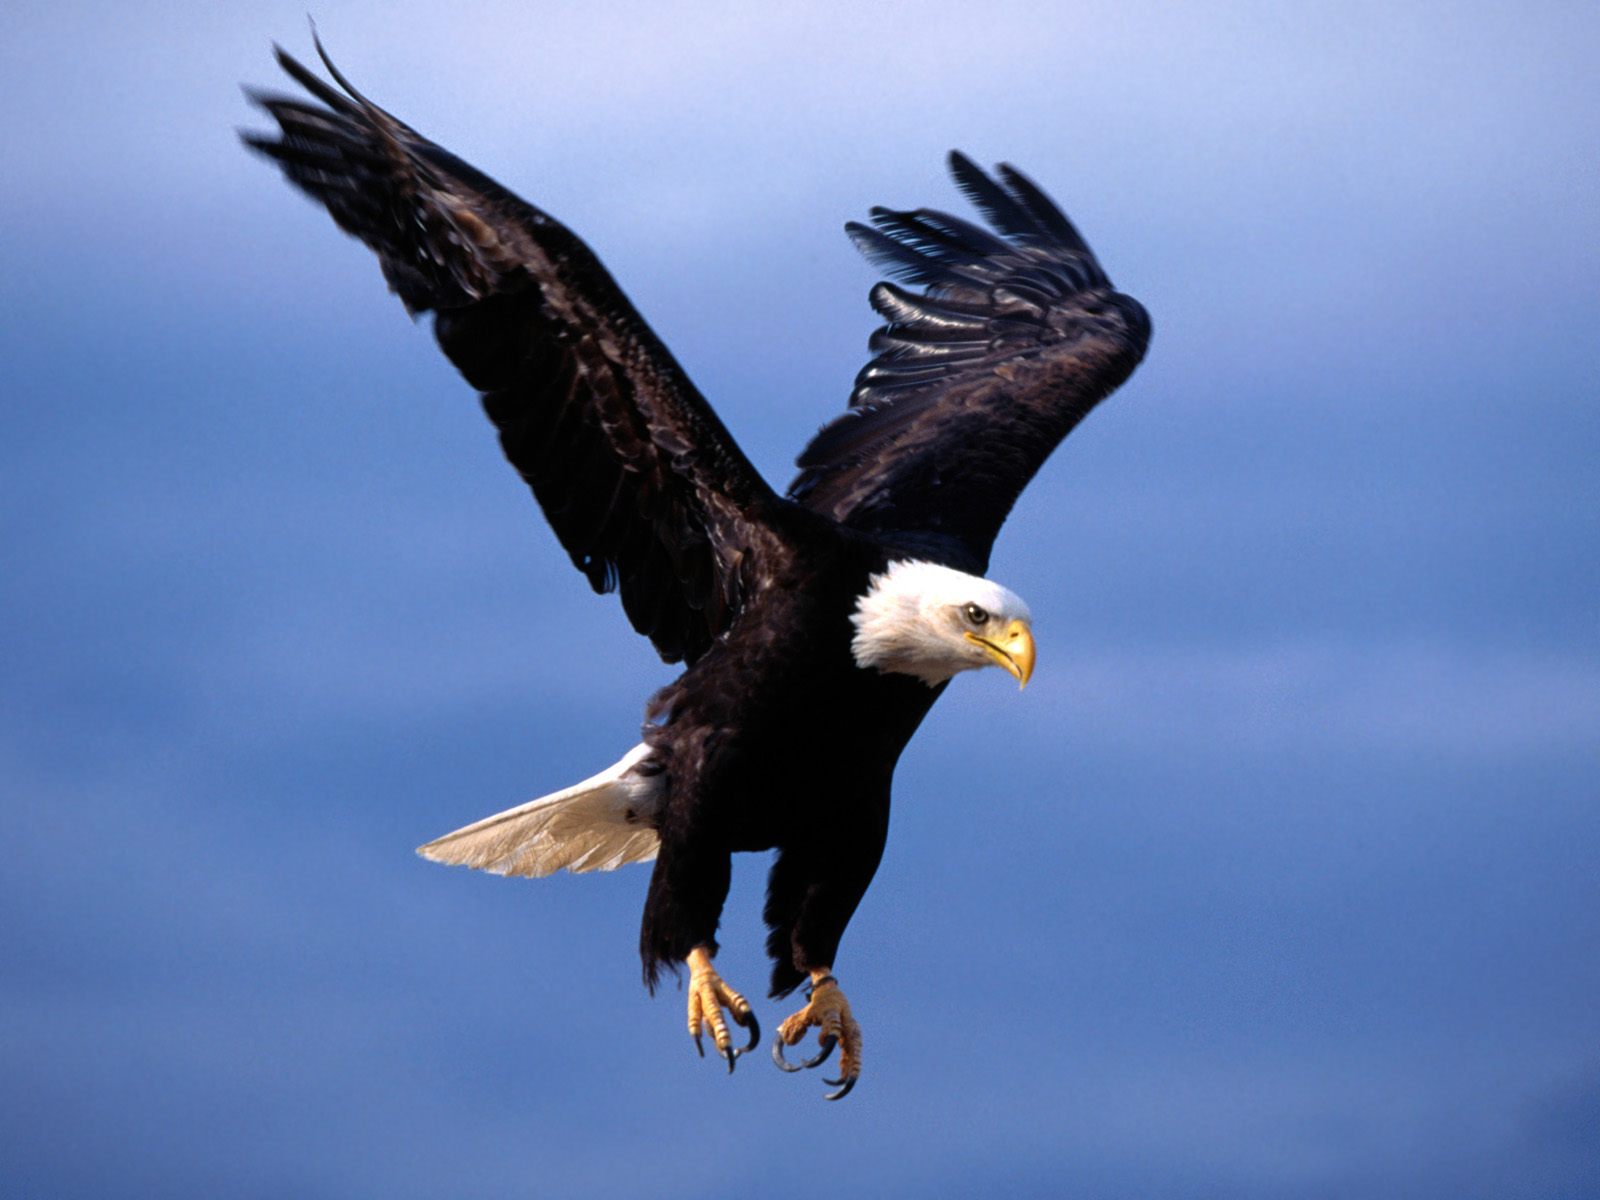 Mobile Desktop Background Hd Images Of The American Bald Eagle